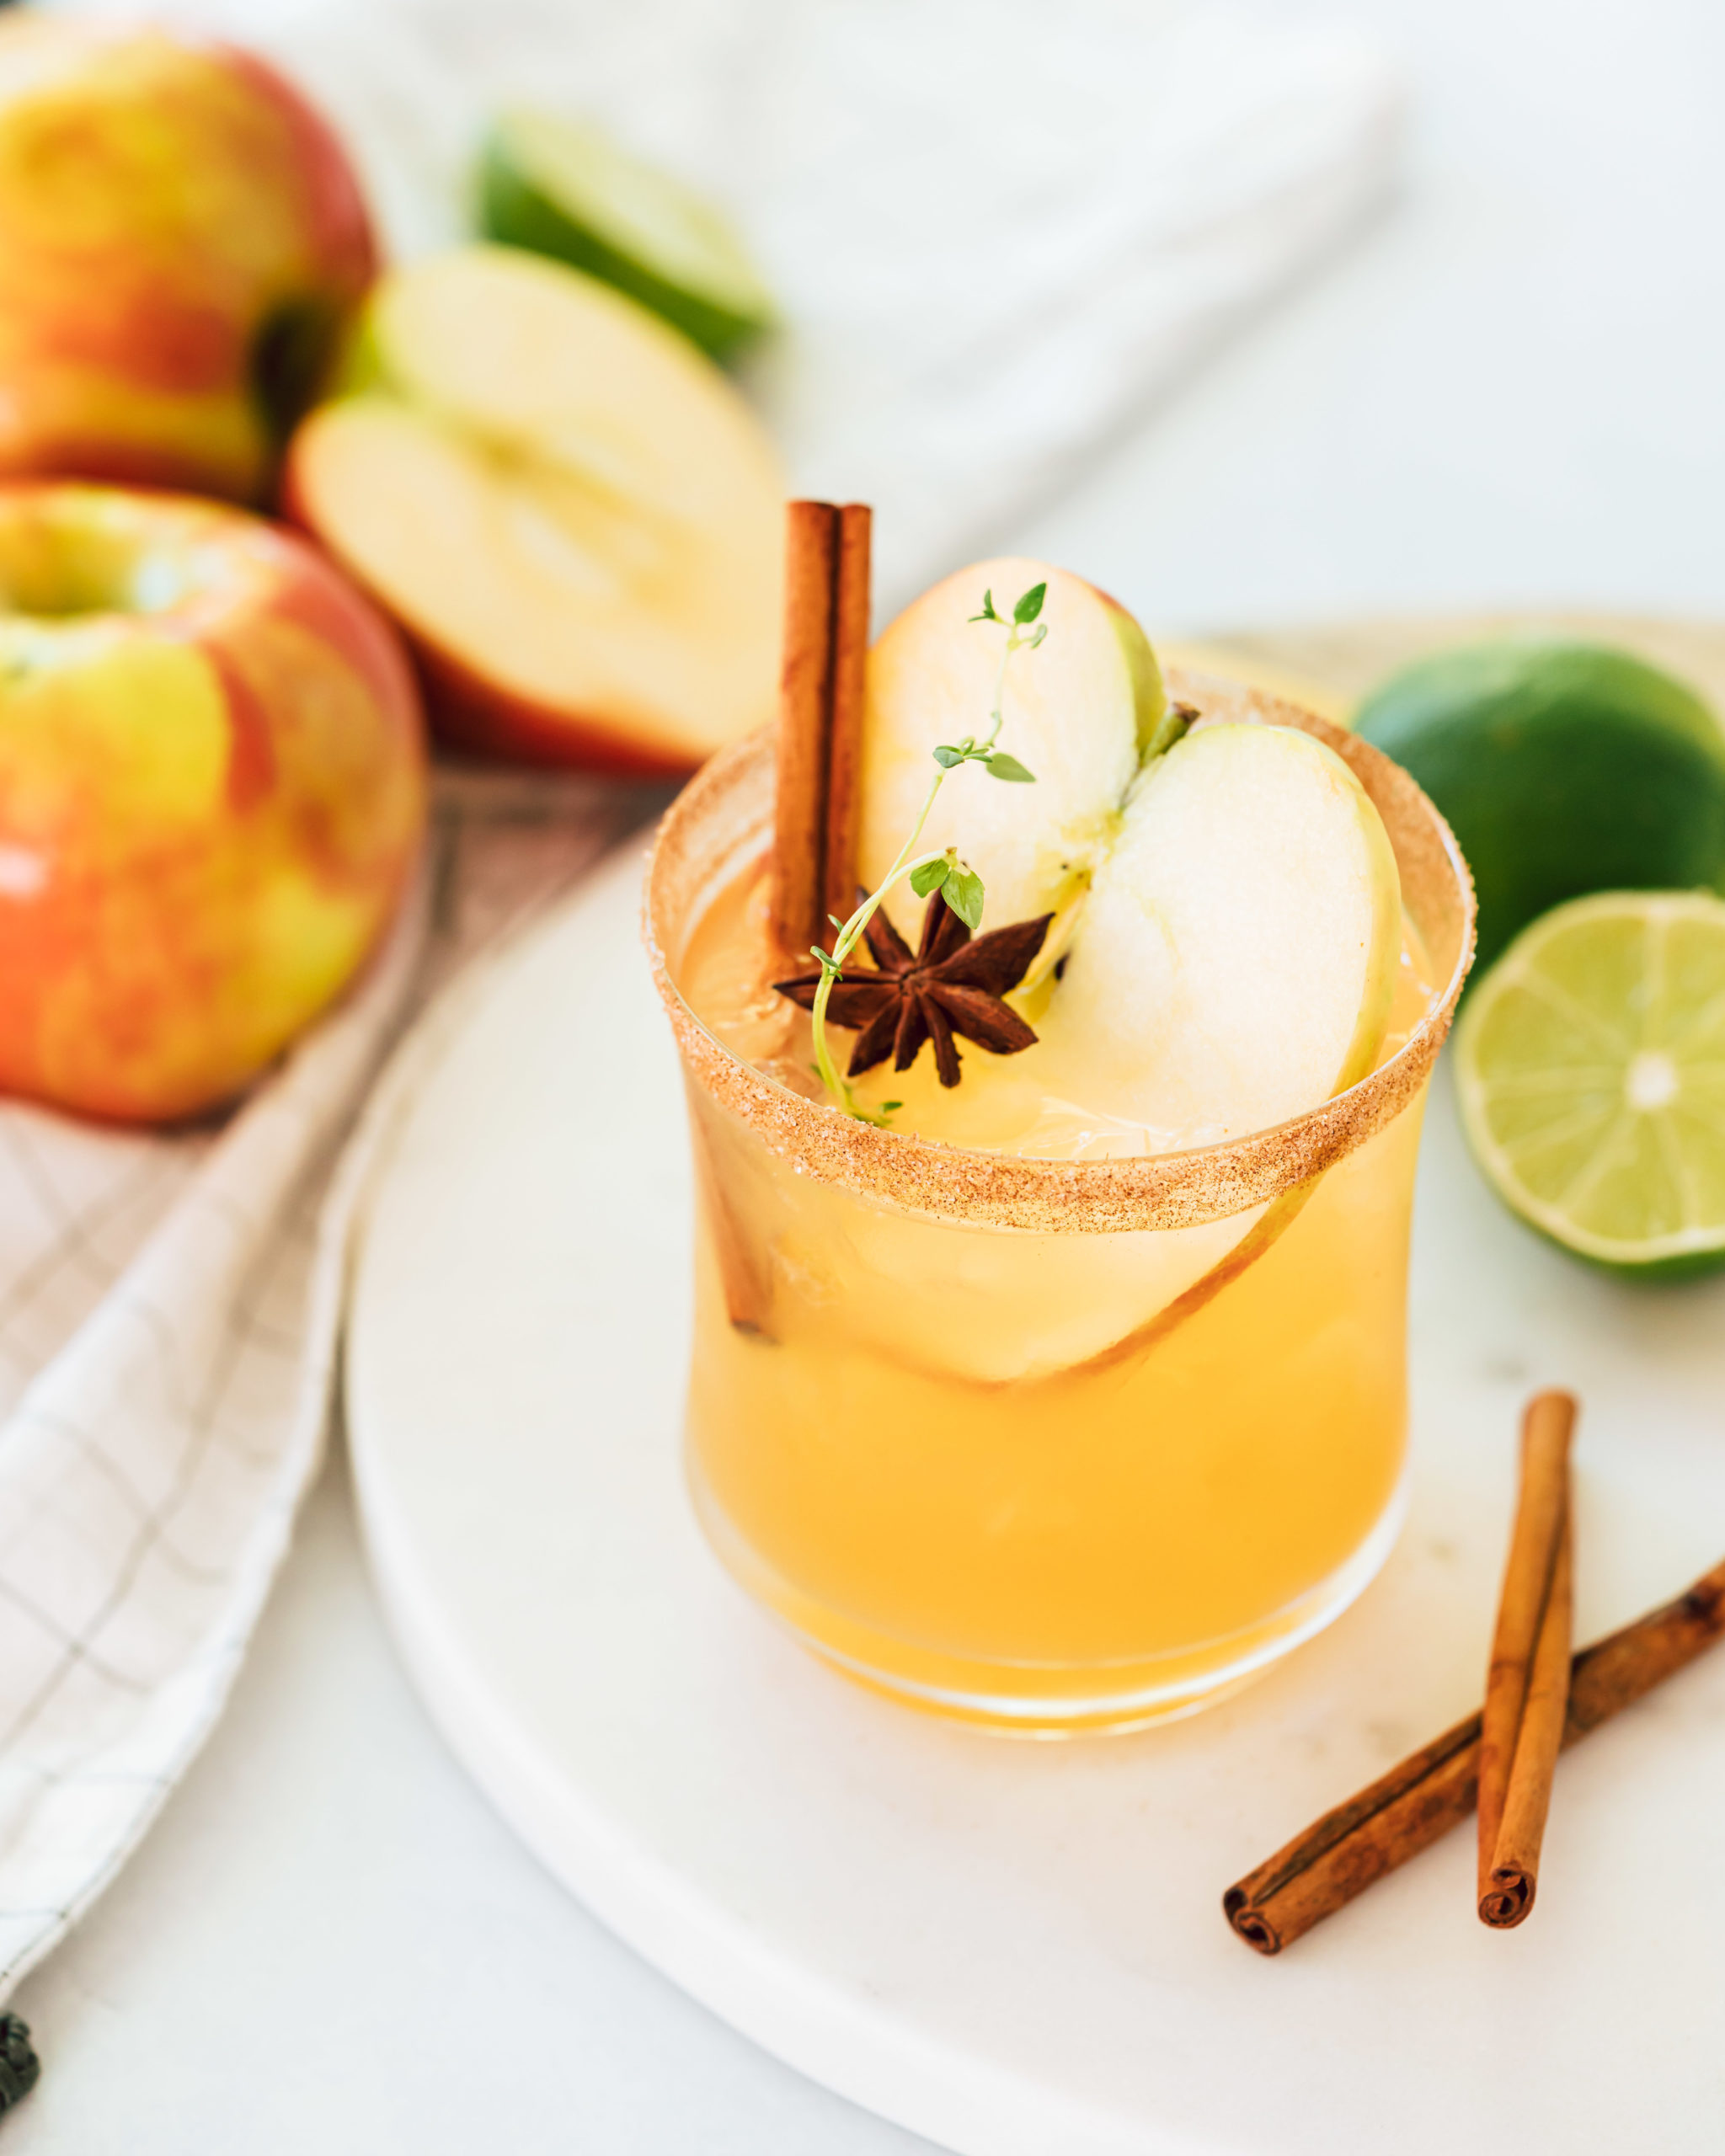 Apple Cider Margarita